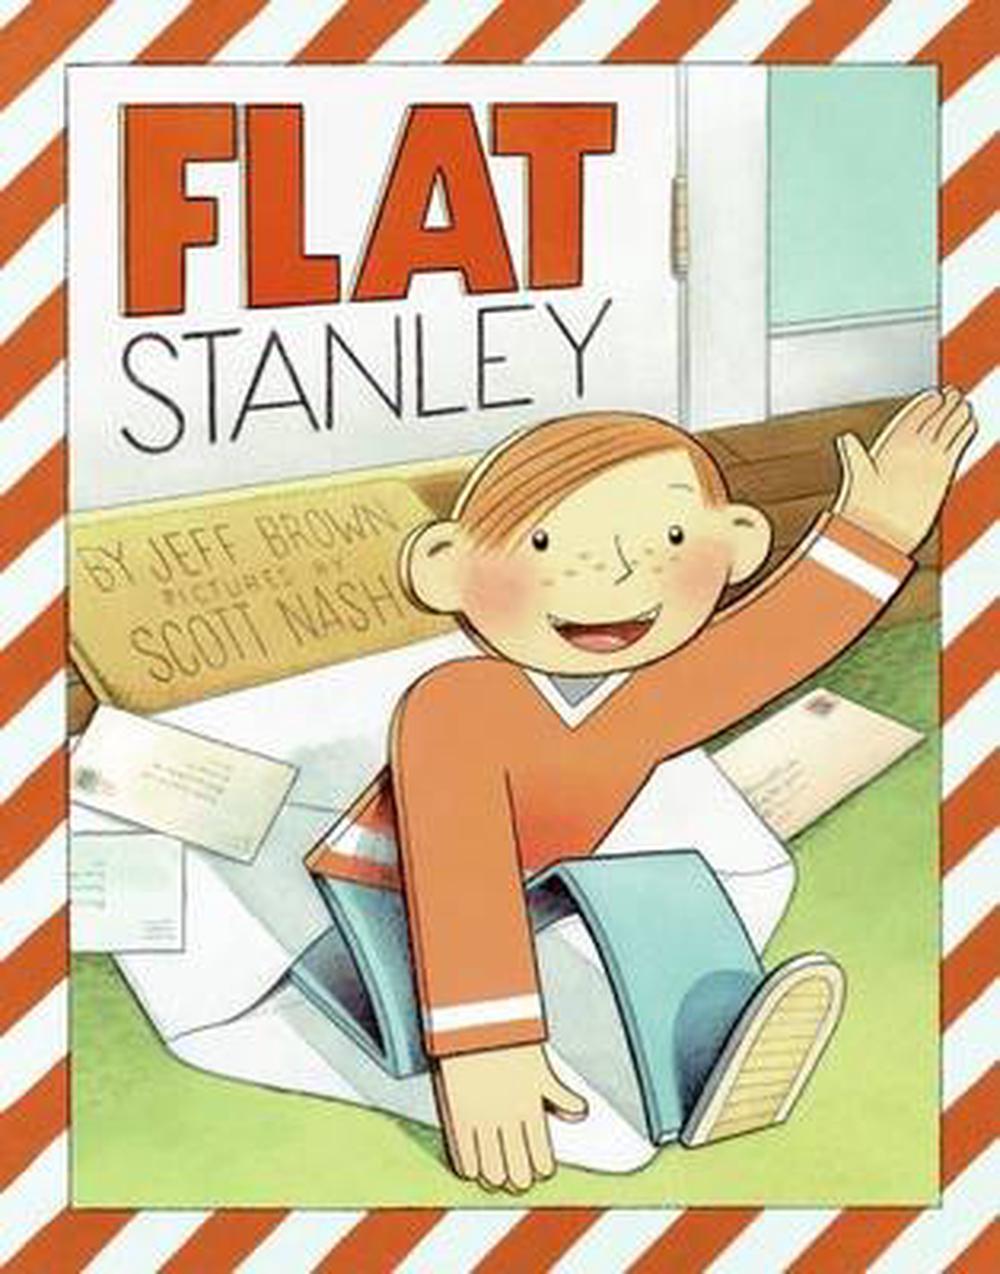 flat stanley cartoon